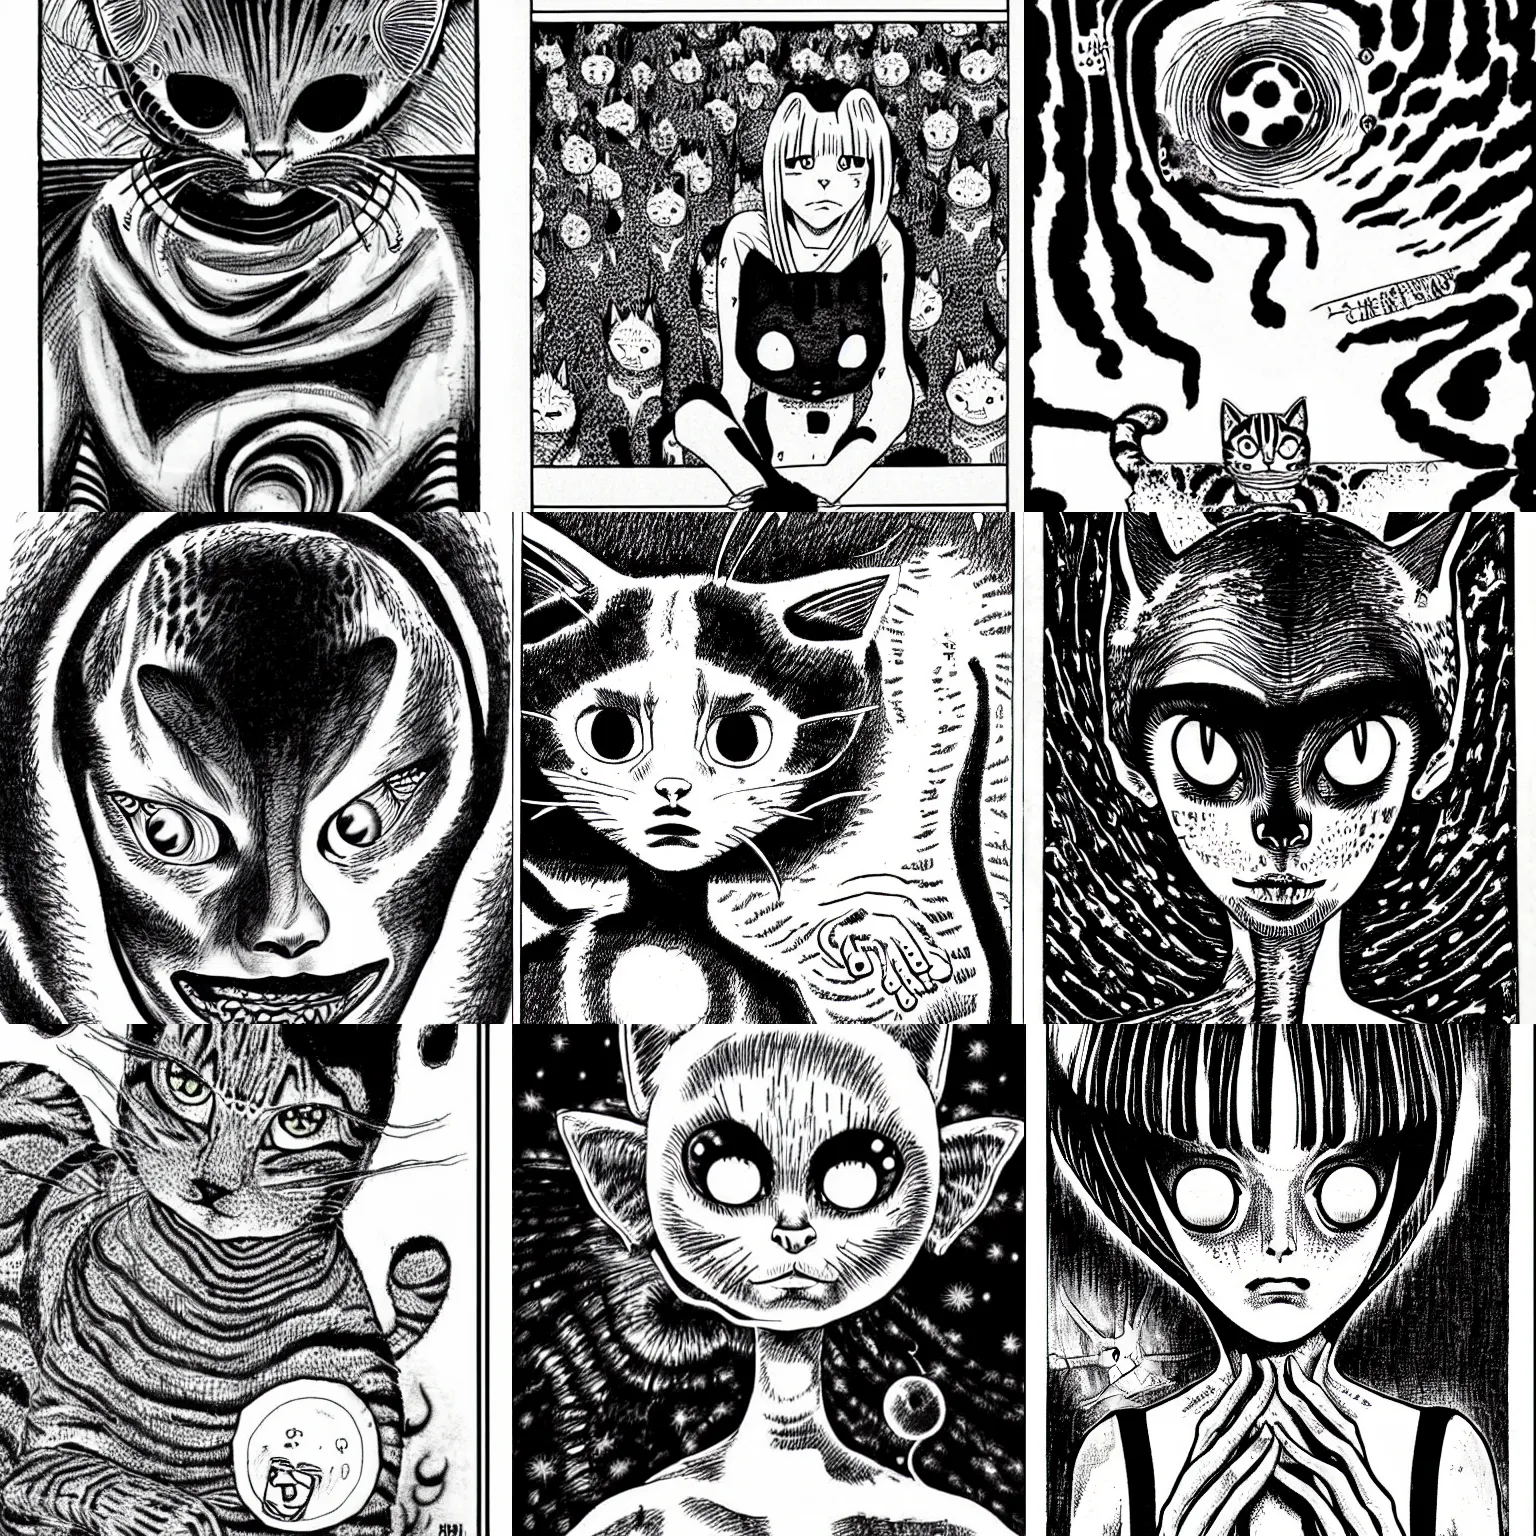 Prompt: feline alien drawn by Junji Ito, uncanny, horrific, horror manga, inhuman, cute, calm, intelligent, serene